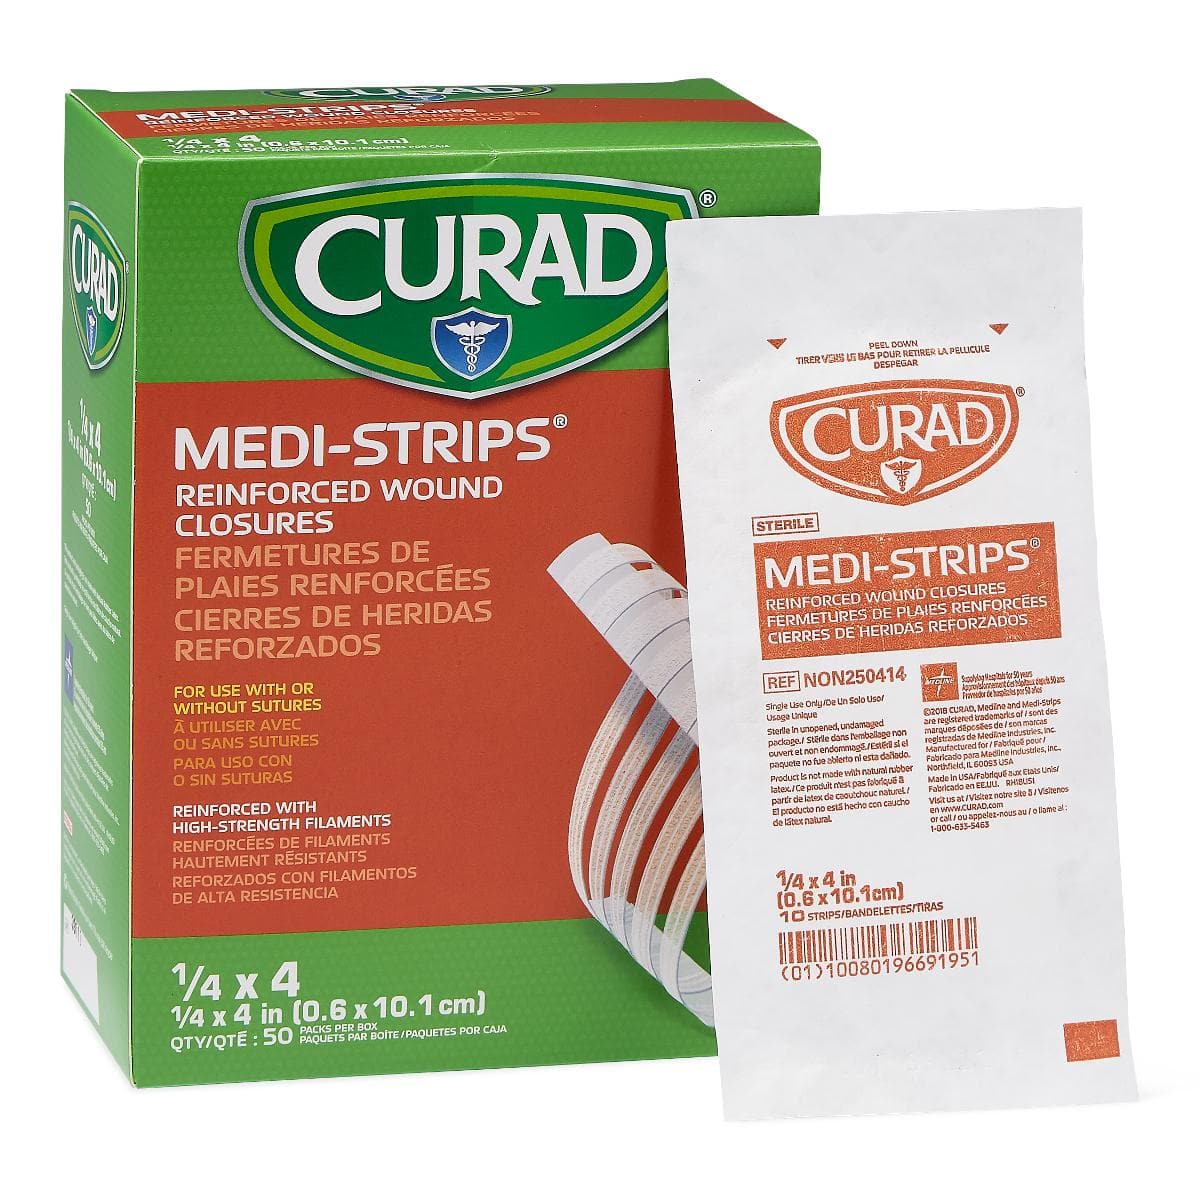 Medline 1/4"x4" / Box of 300 Medline CURAD Medi-Strip Reinforced Wound Closures